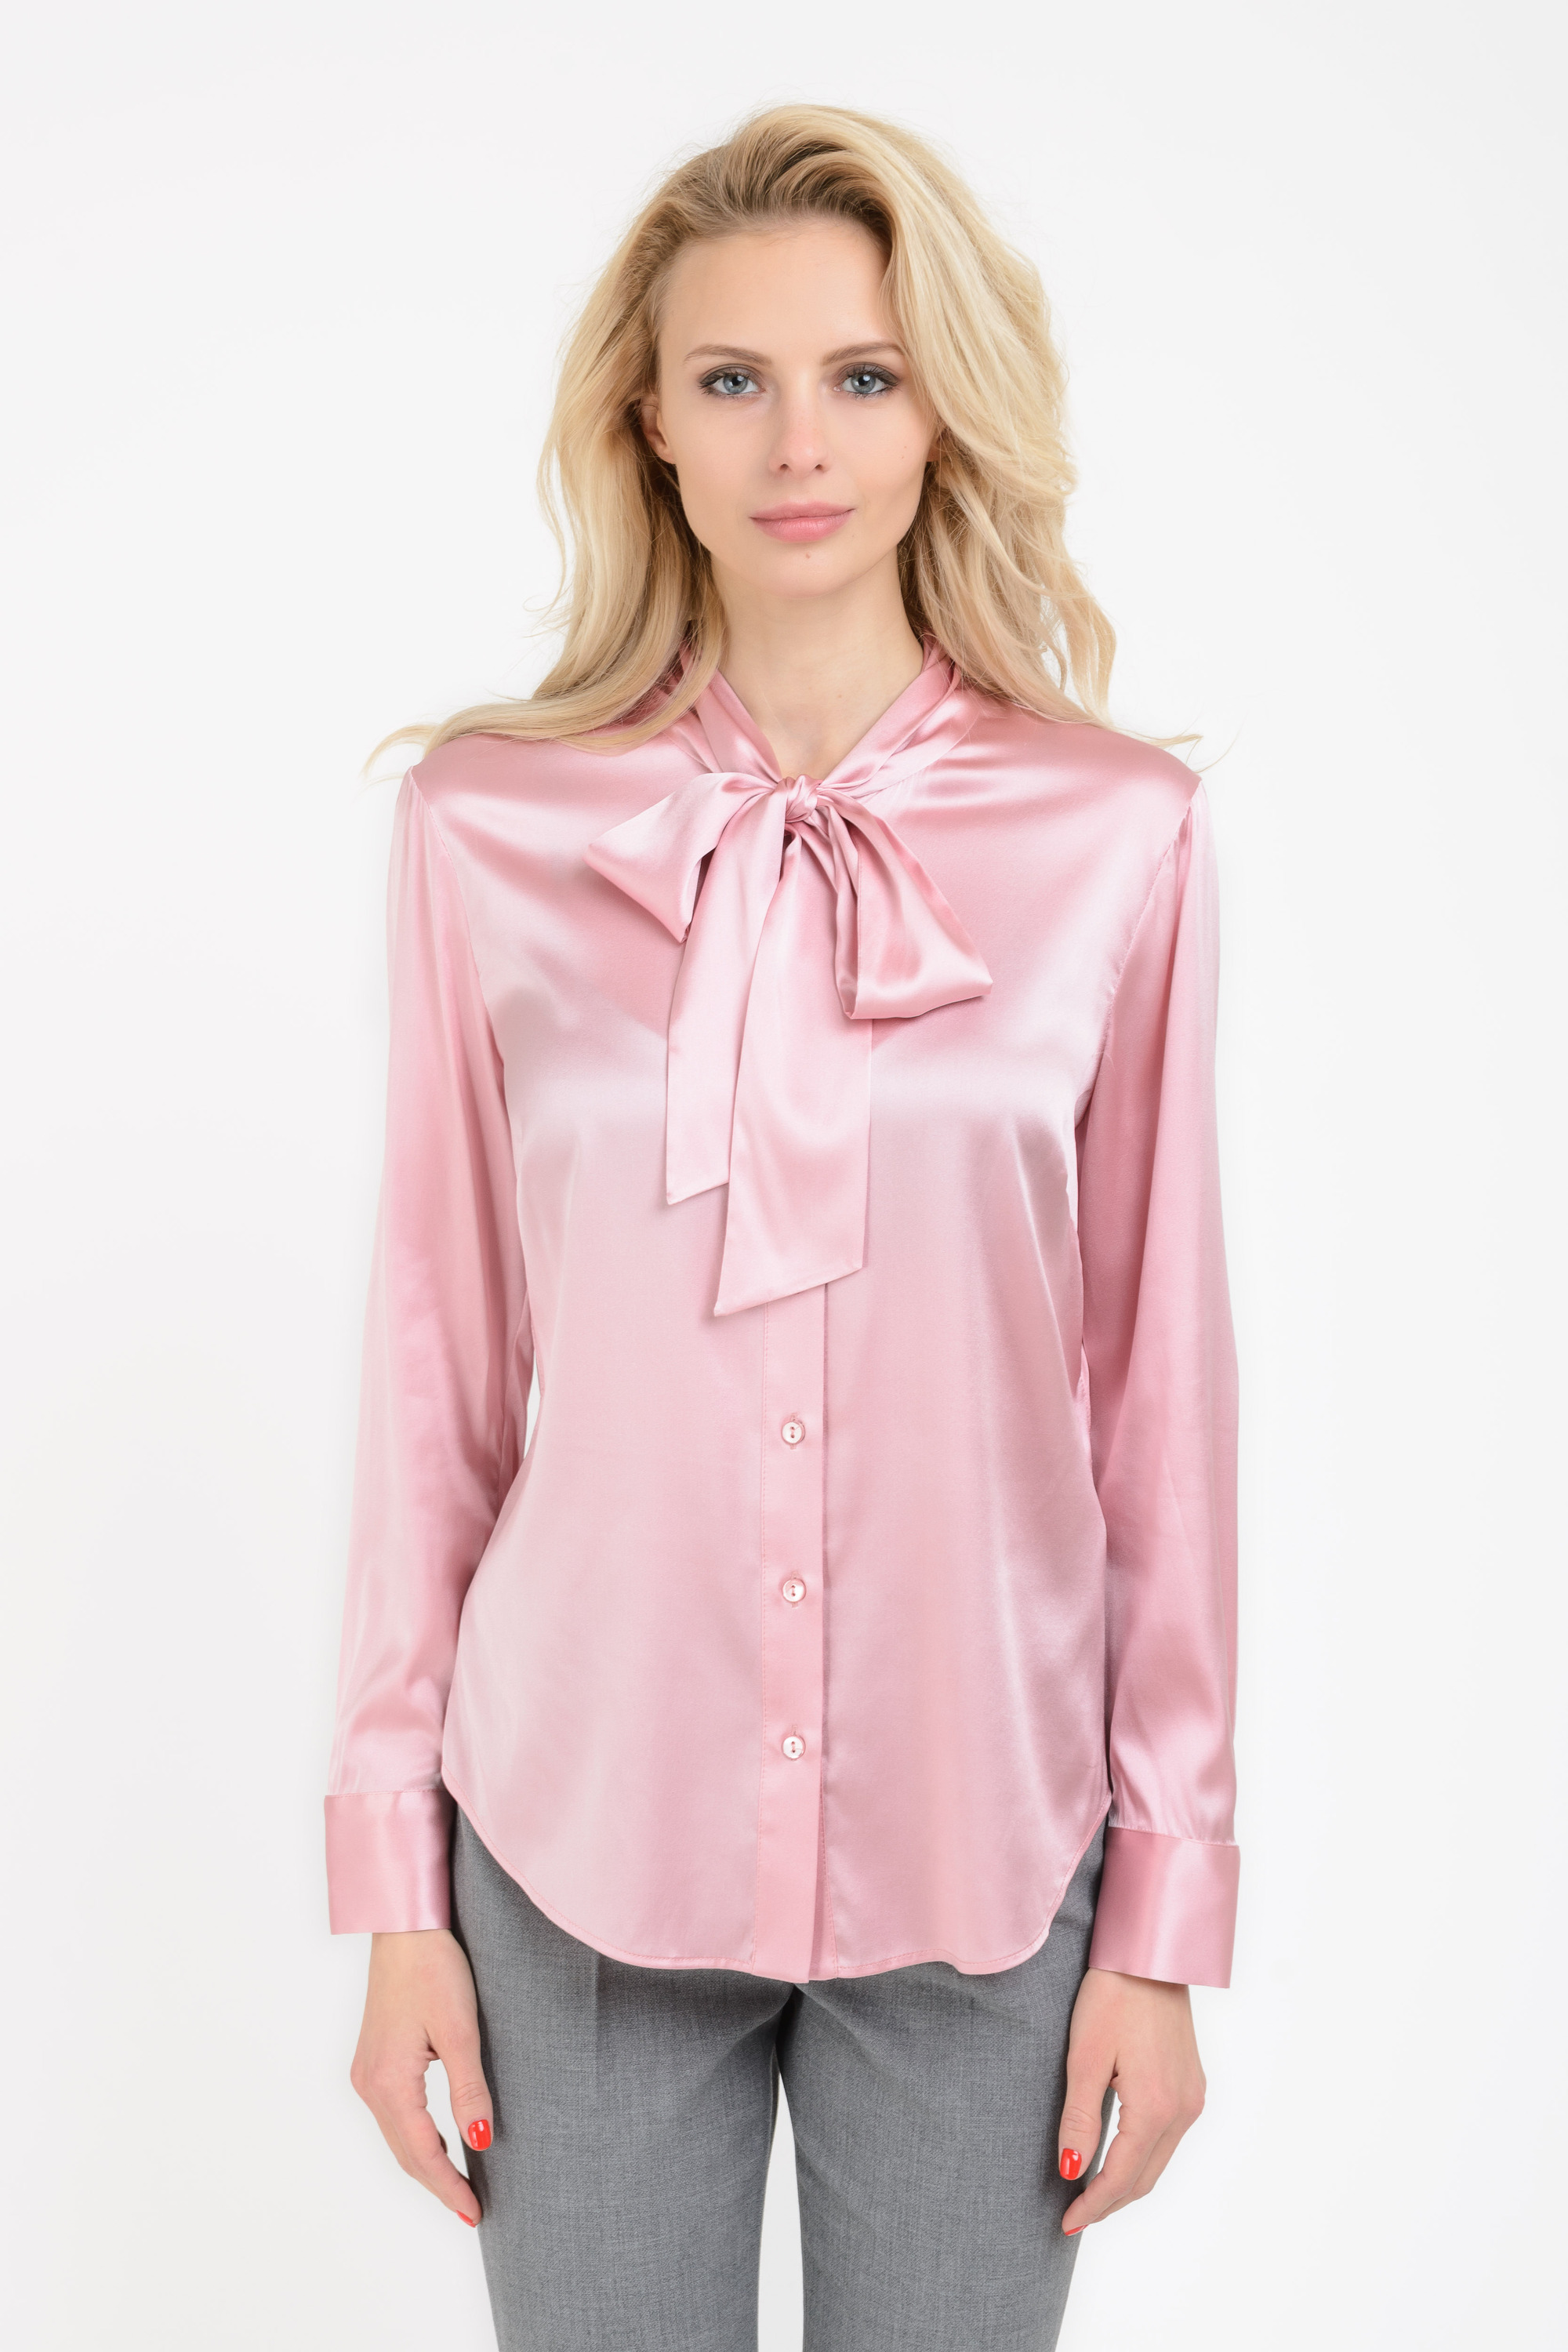 Блузки 72. Блузки шелк,,Luisa Spagnoli. Luisa Spagnoli зеленая блуза. Розовая блузка.